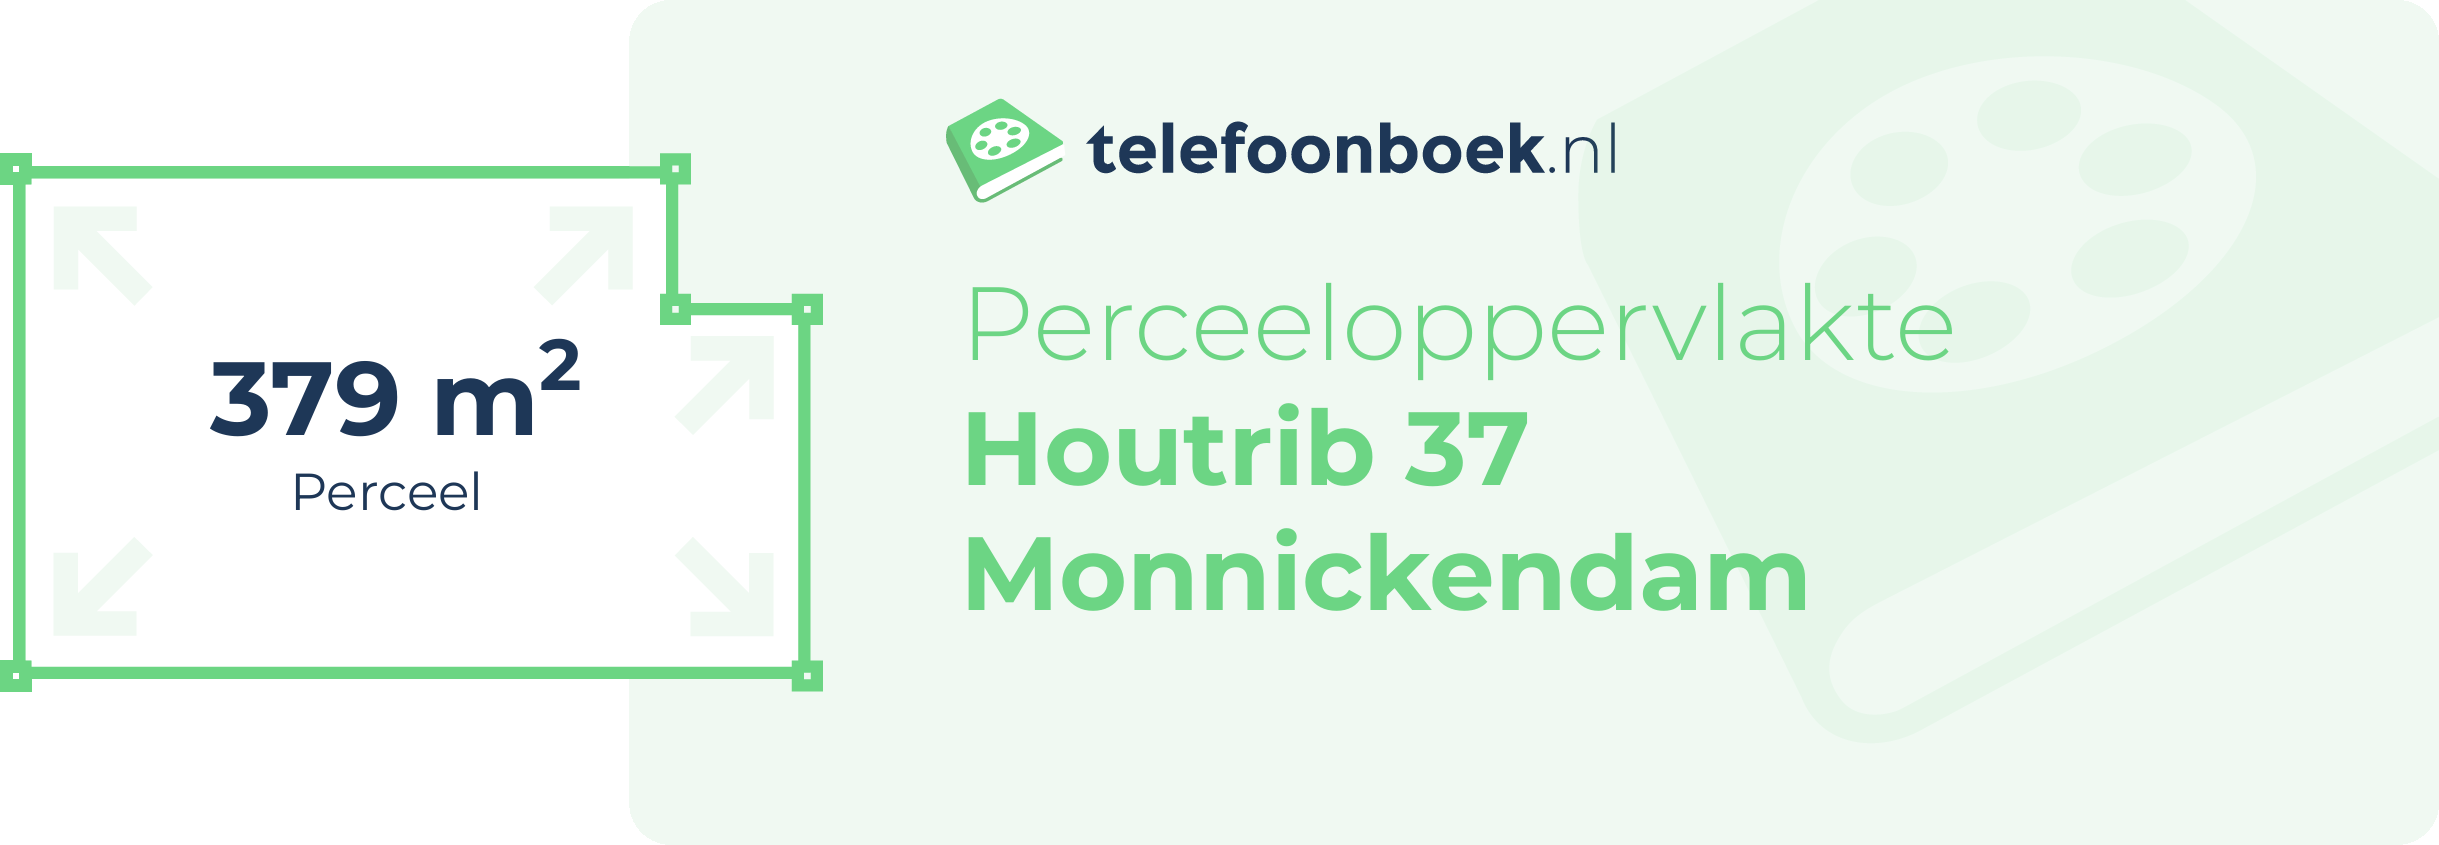 Perceeloppervlakte Houtrib 37 Monnickendam